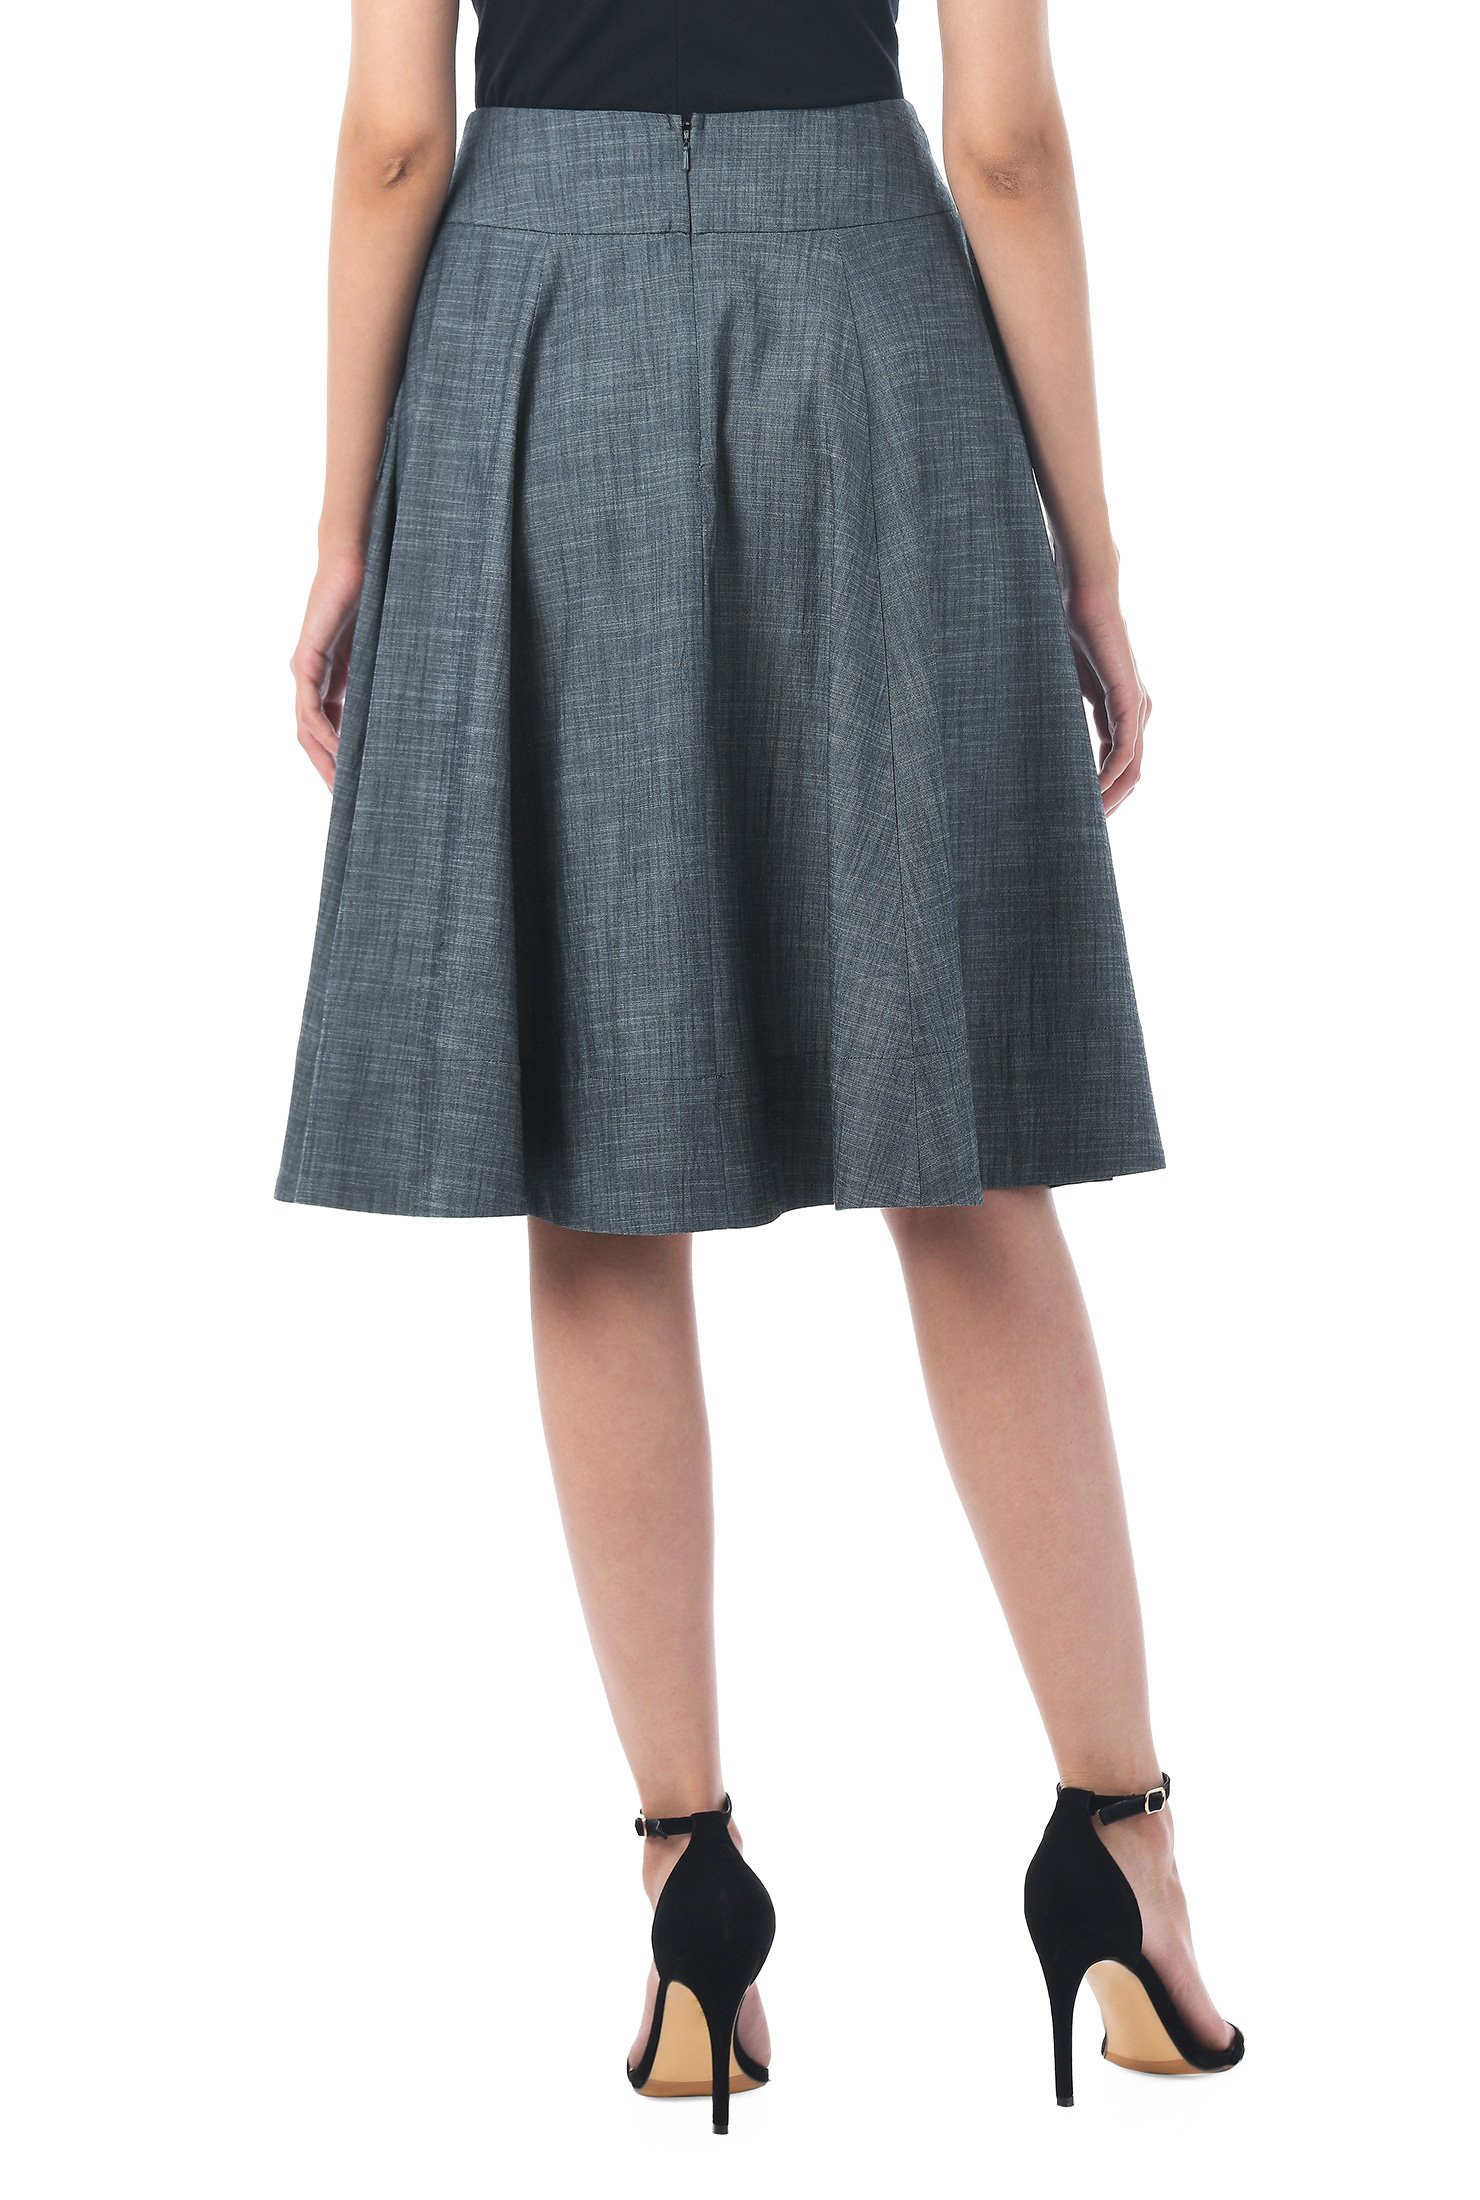 Shop Cargo pocket cotton chambray skirt | eShakti